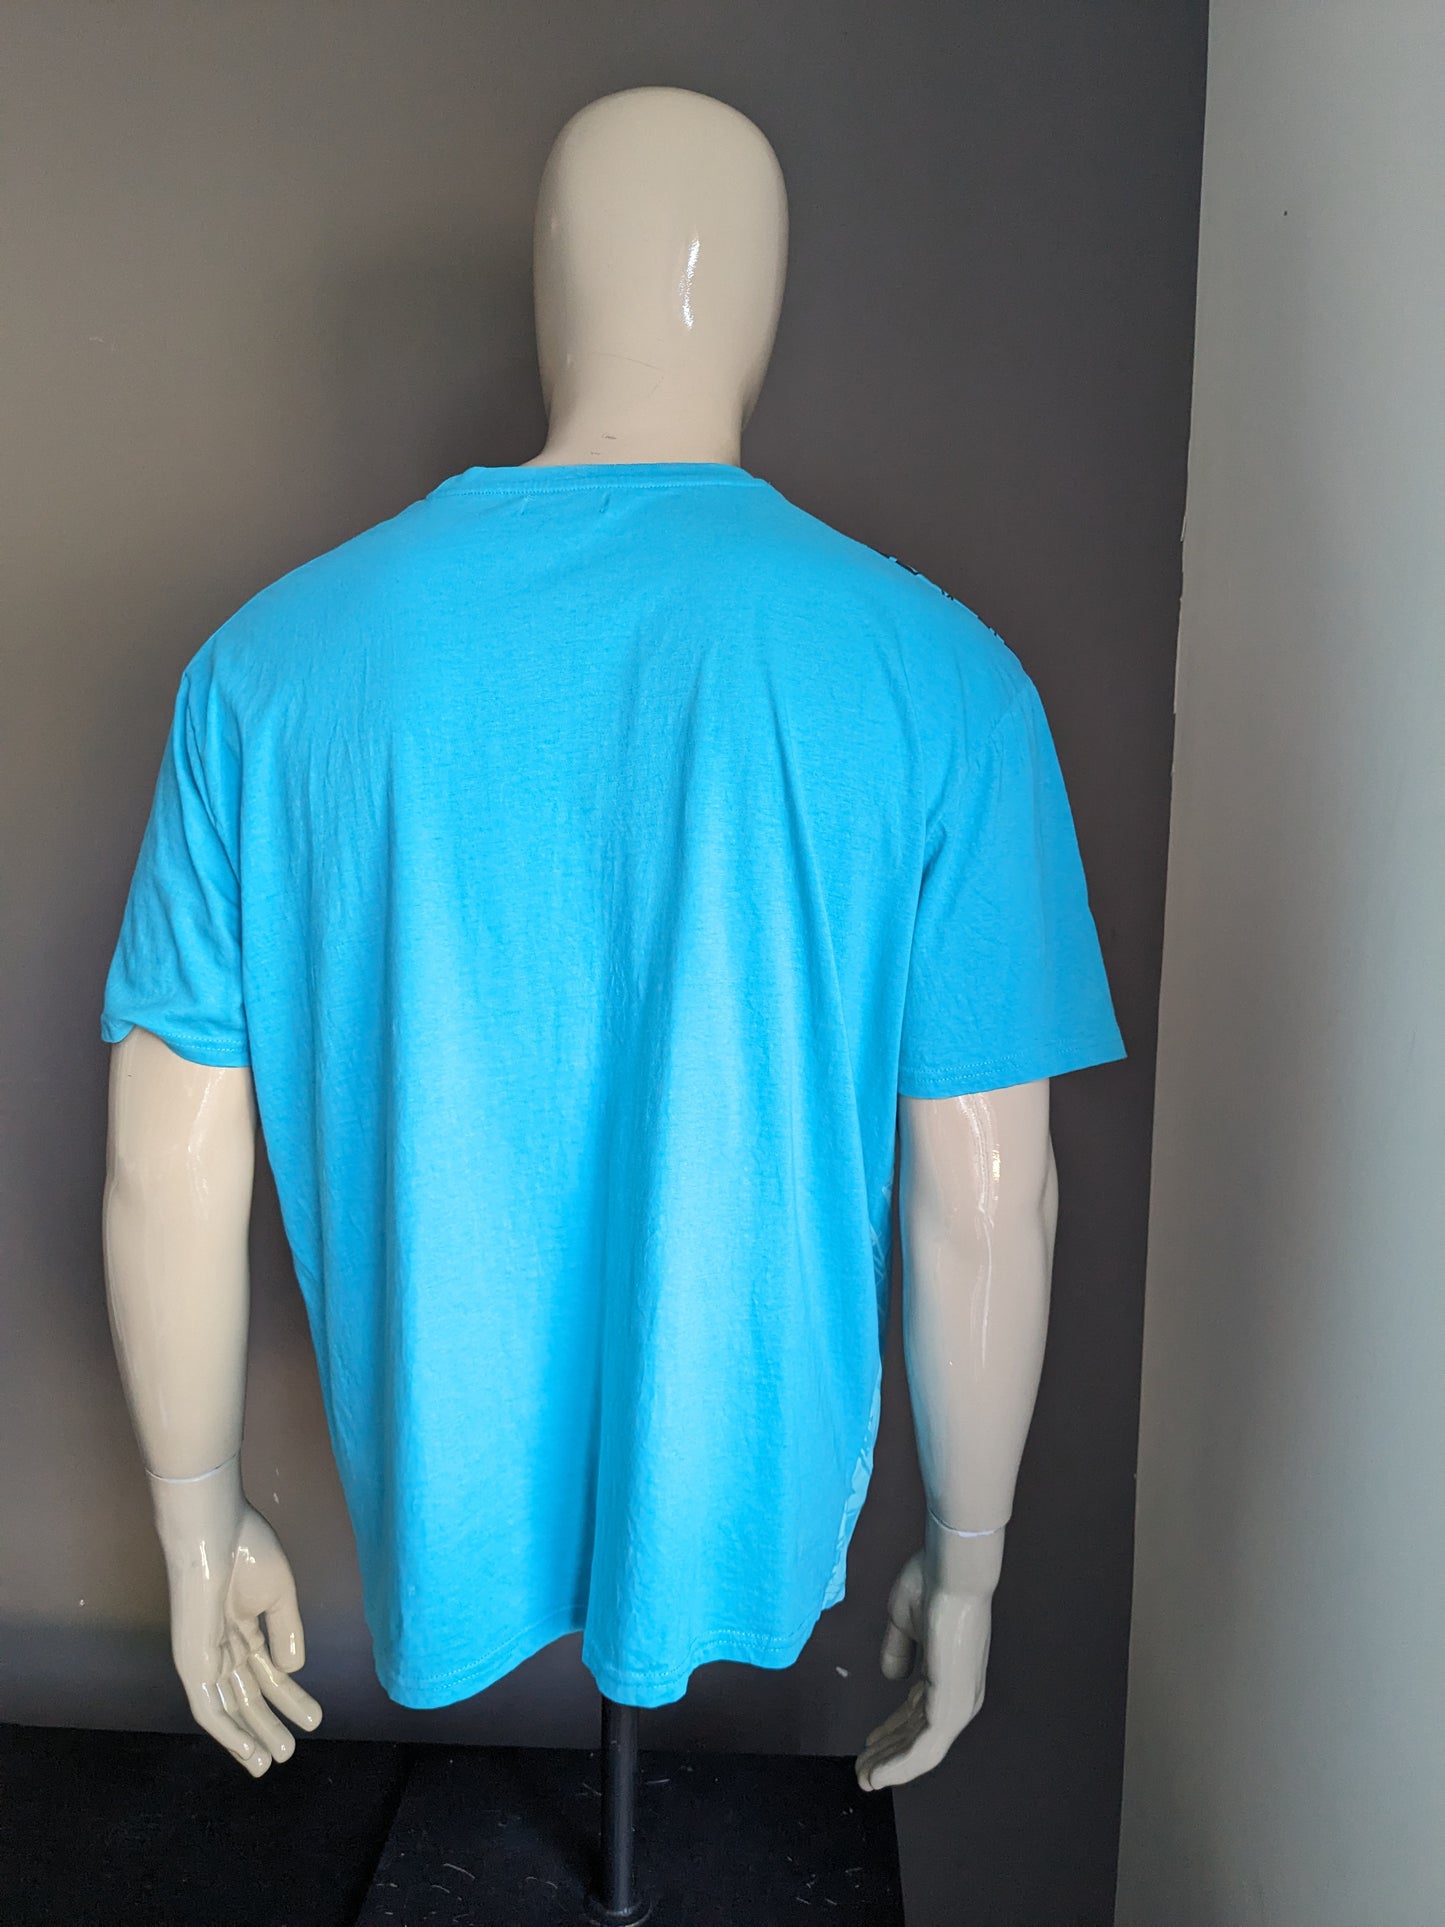 Atlas for Men Shirt. Blu con stampa. Dimensione 3xl / xxxl.